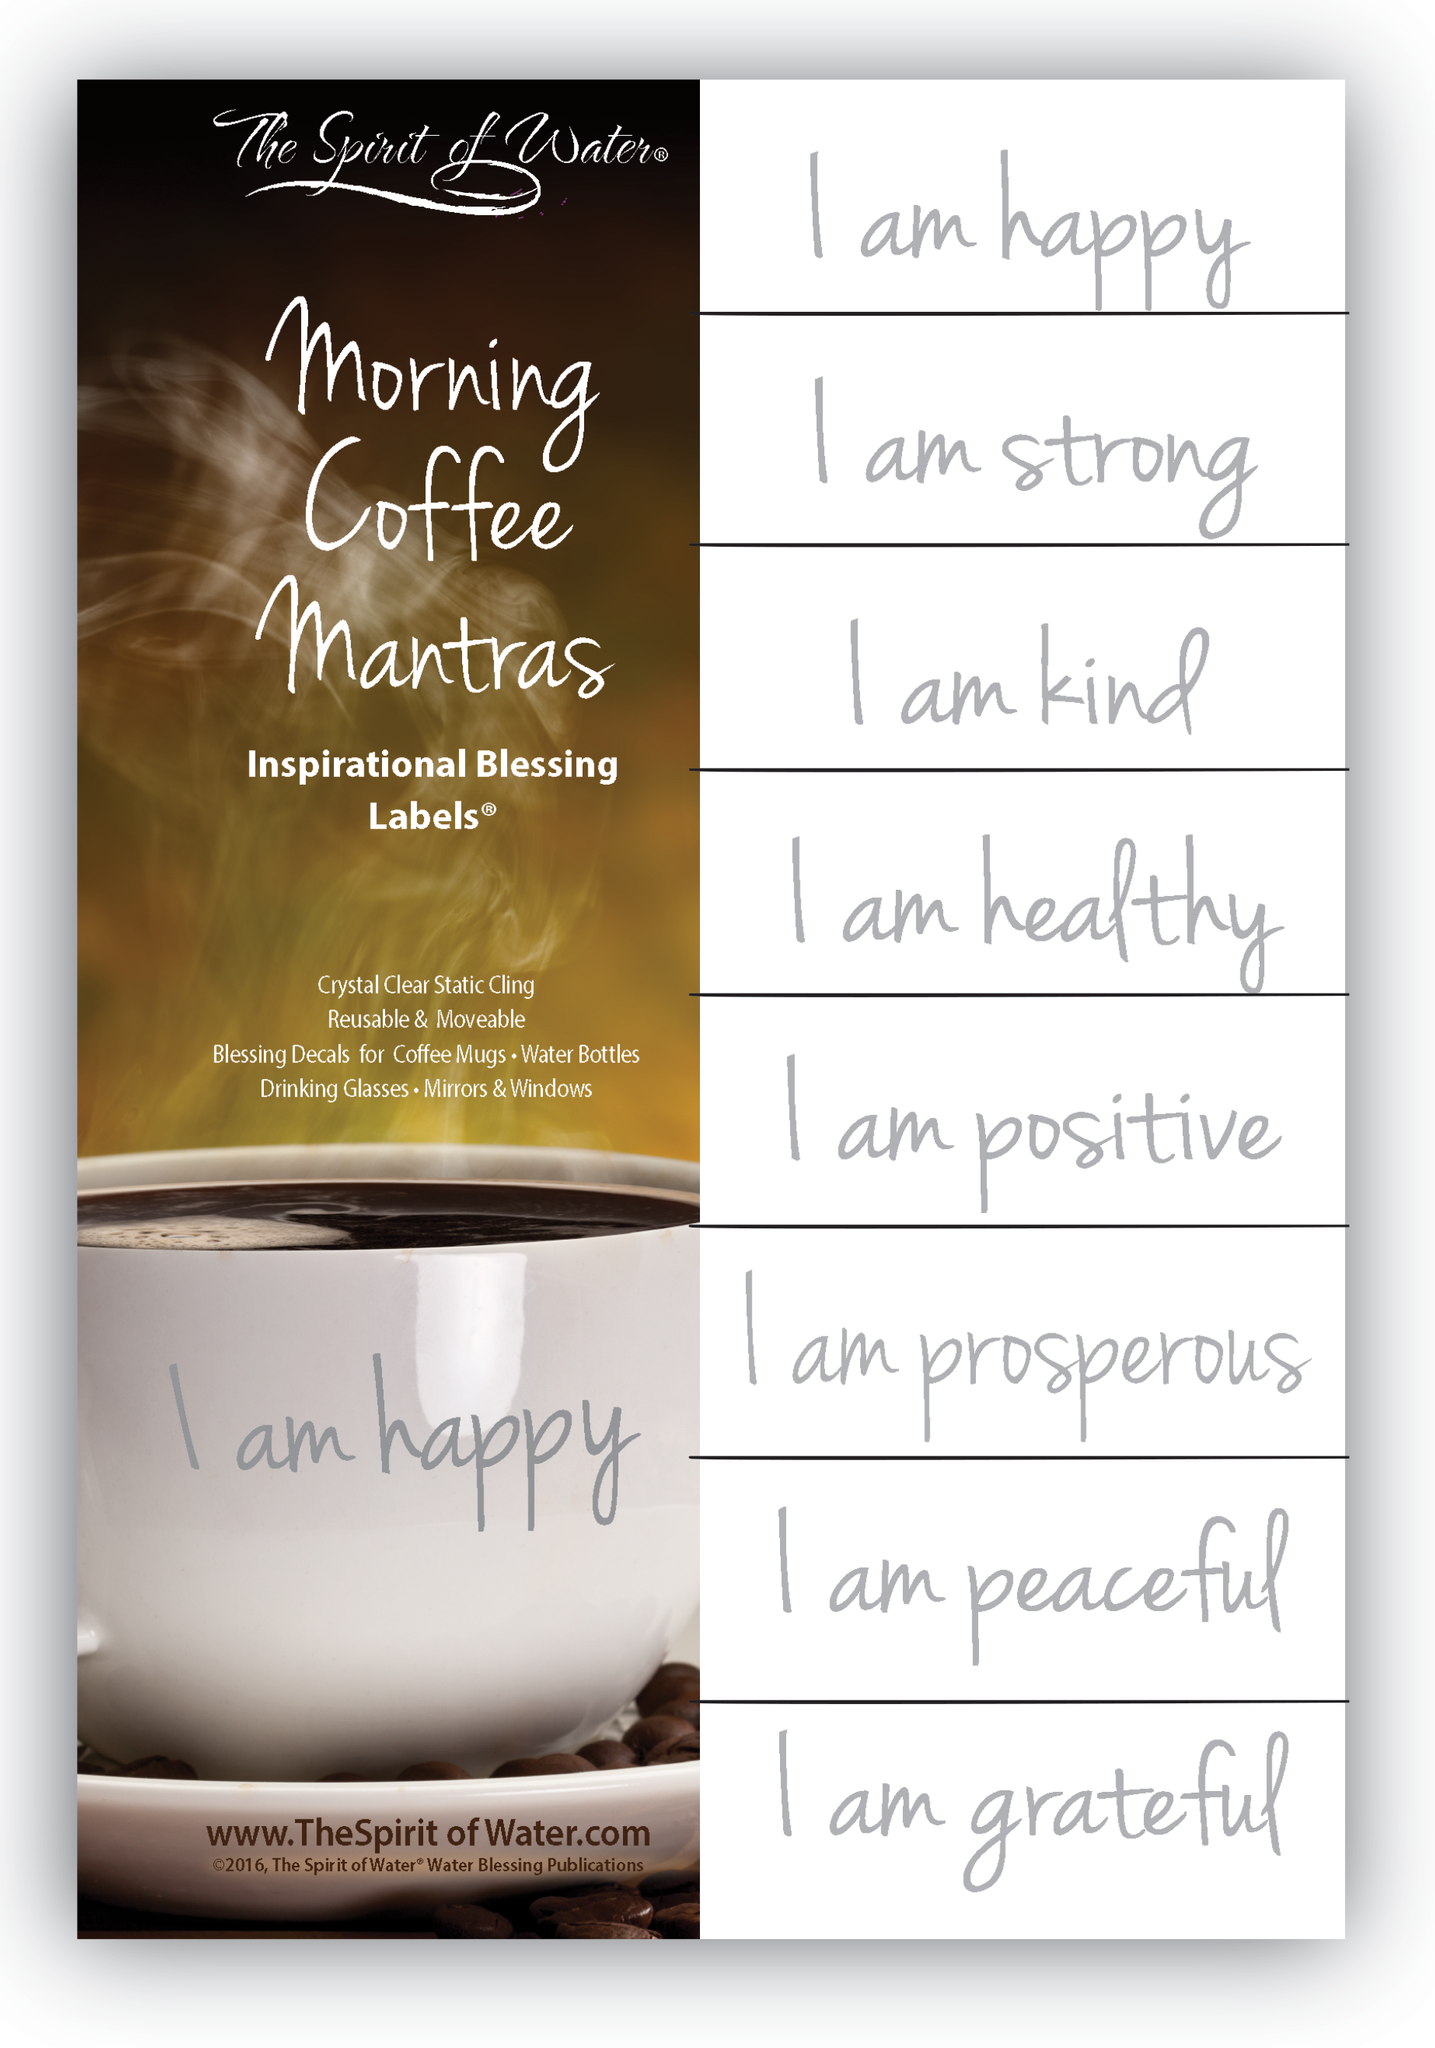 Morning Coffee Mantras